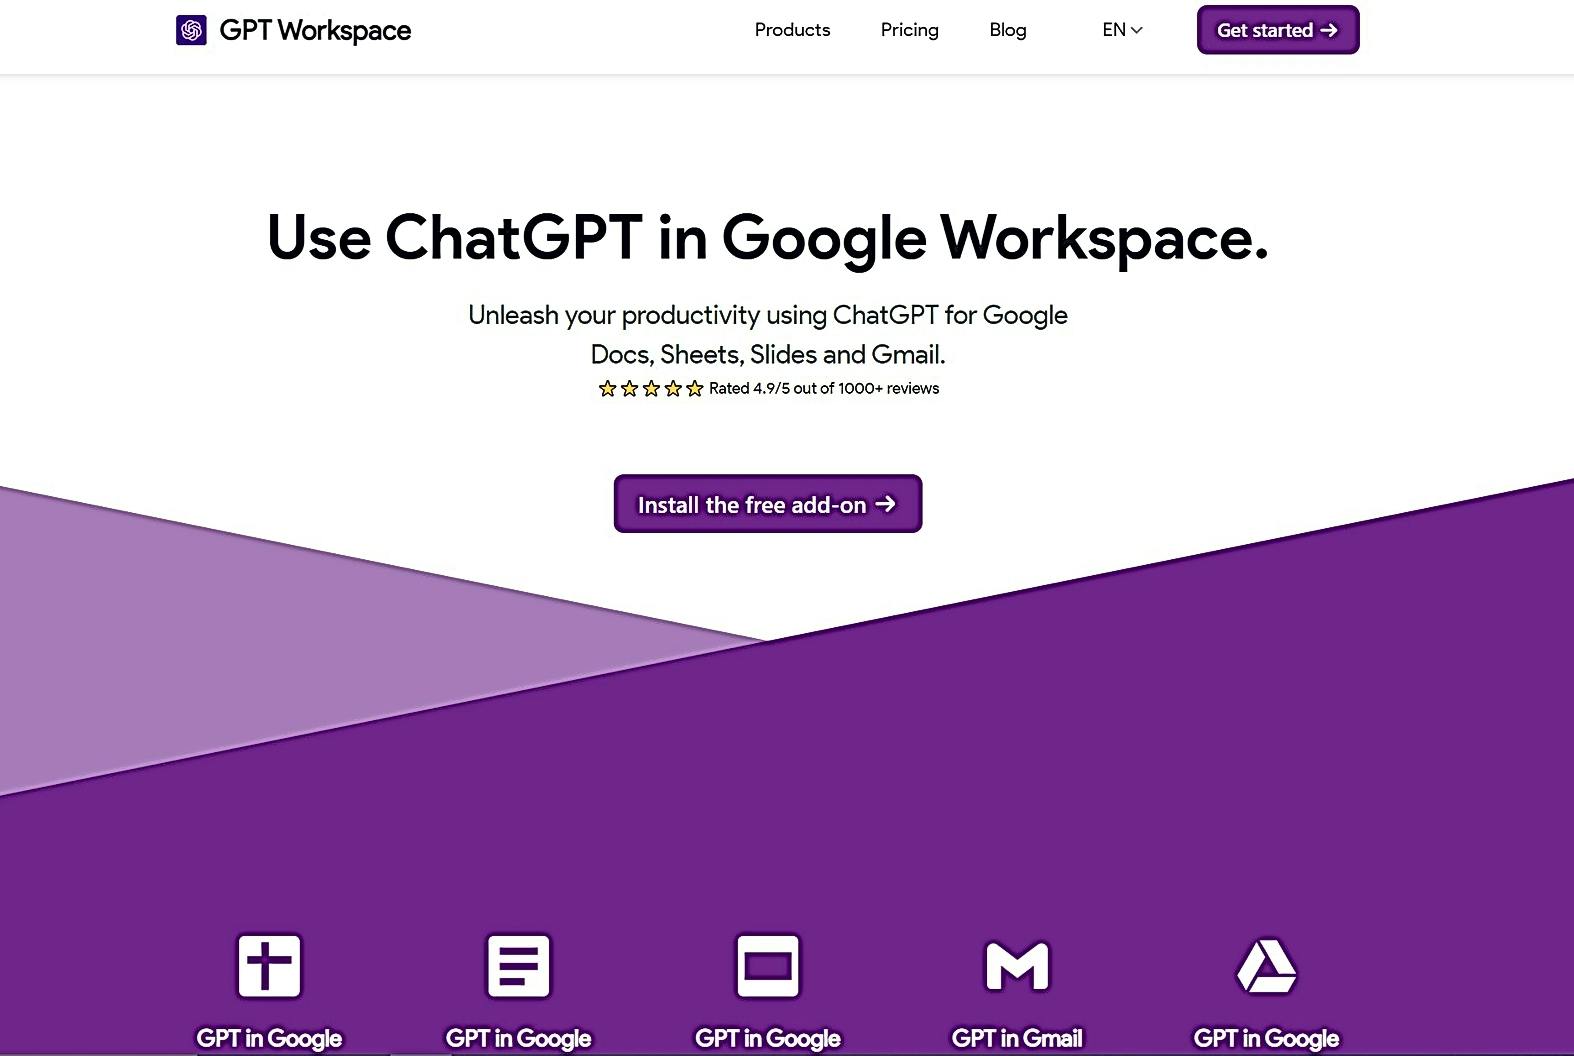 GPT Workspace featured